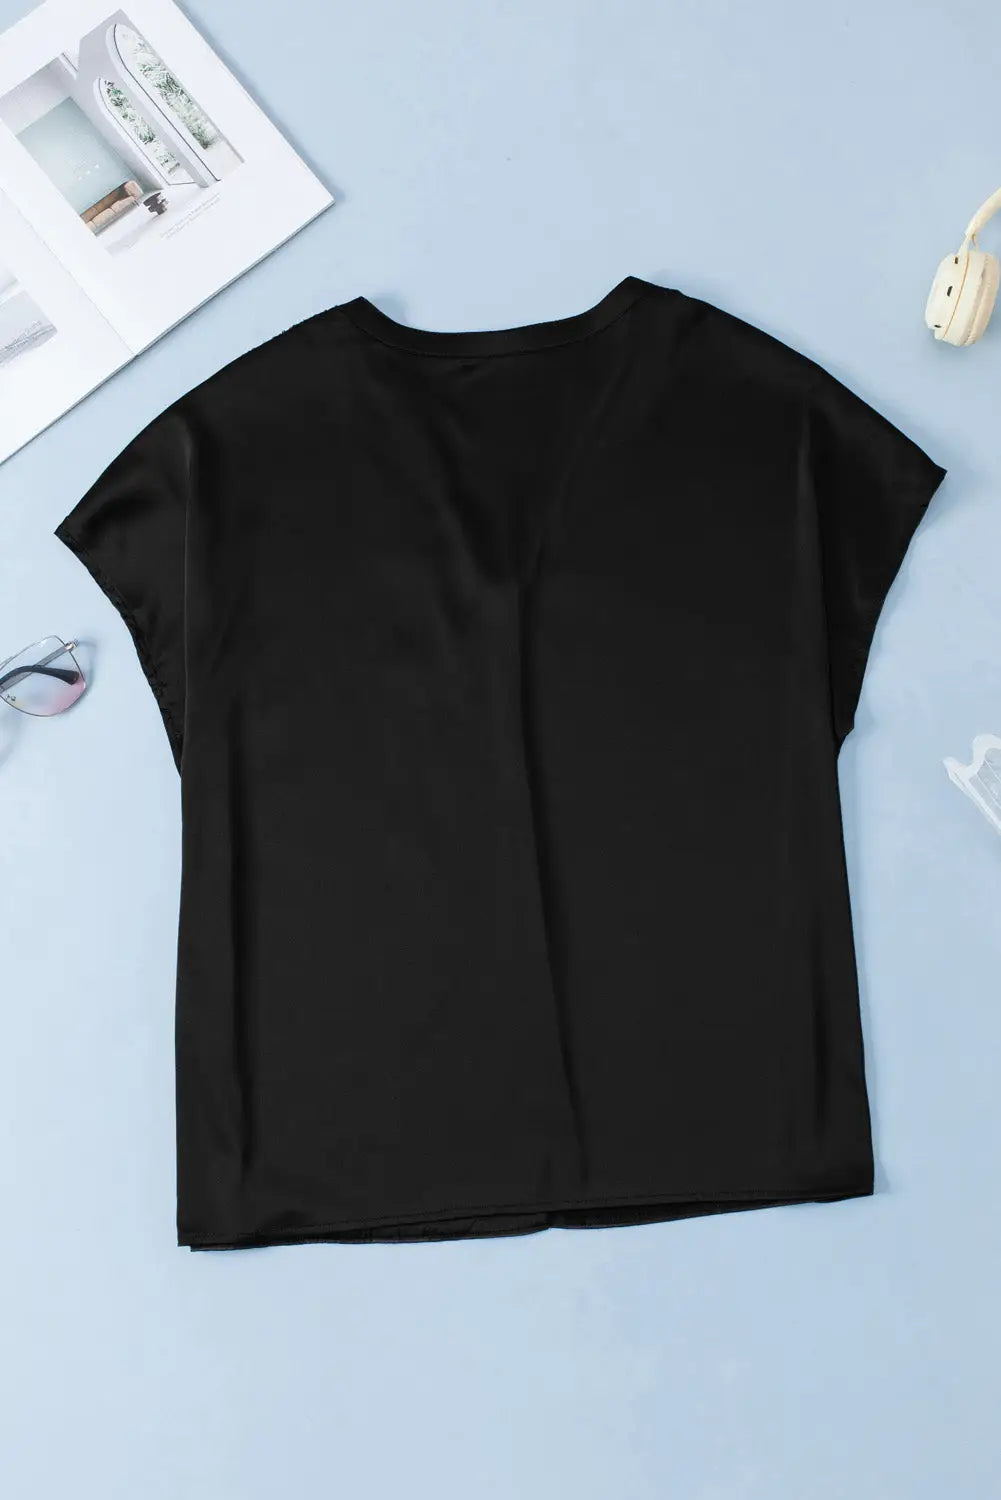 Black plus size sequined v neck top - size/plus tops/plus tops & tees